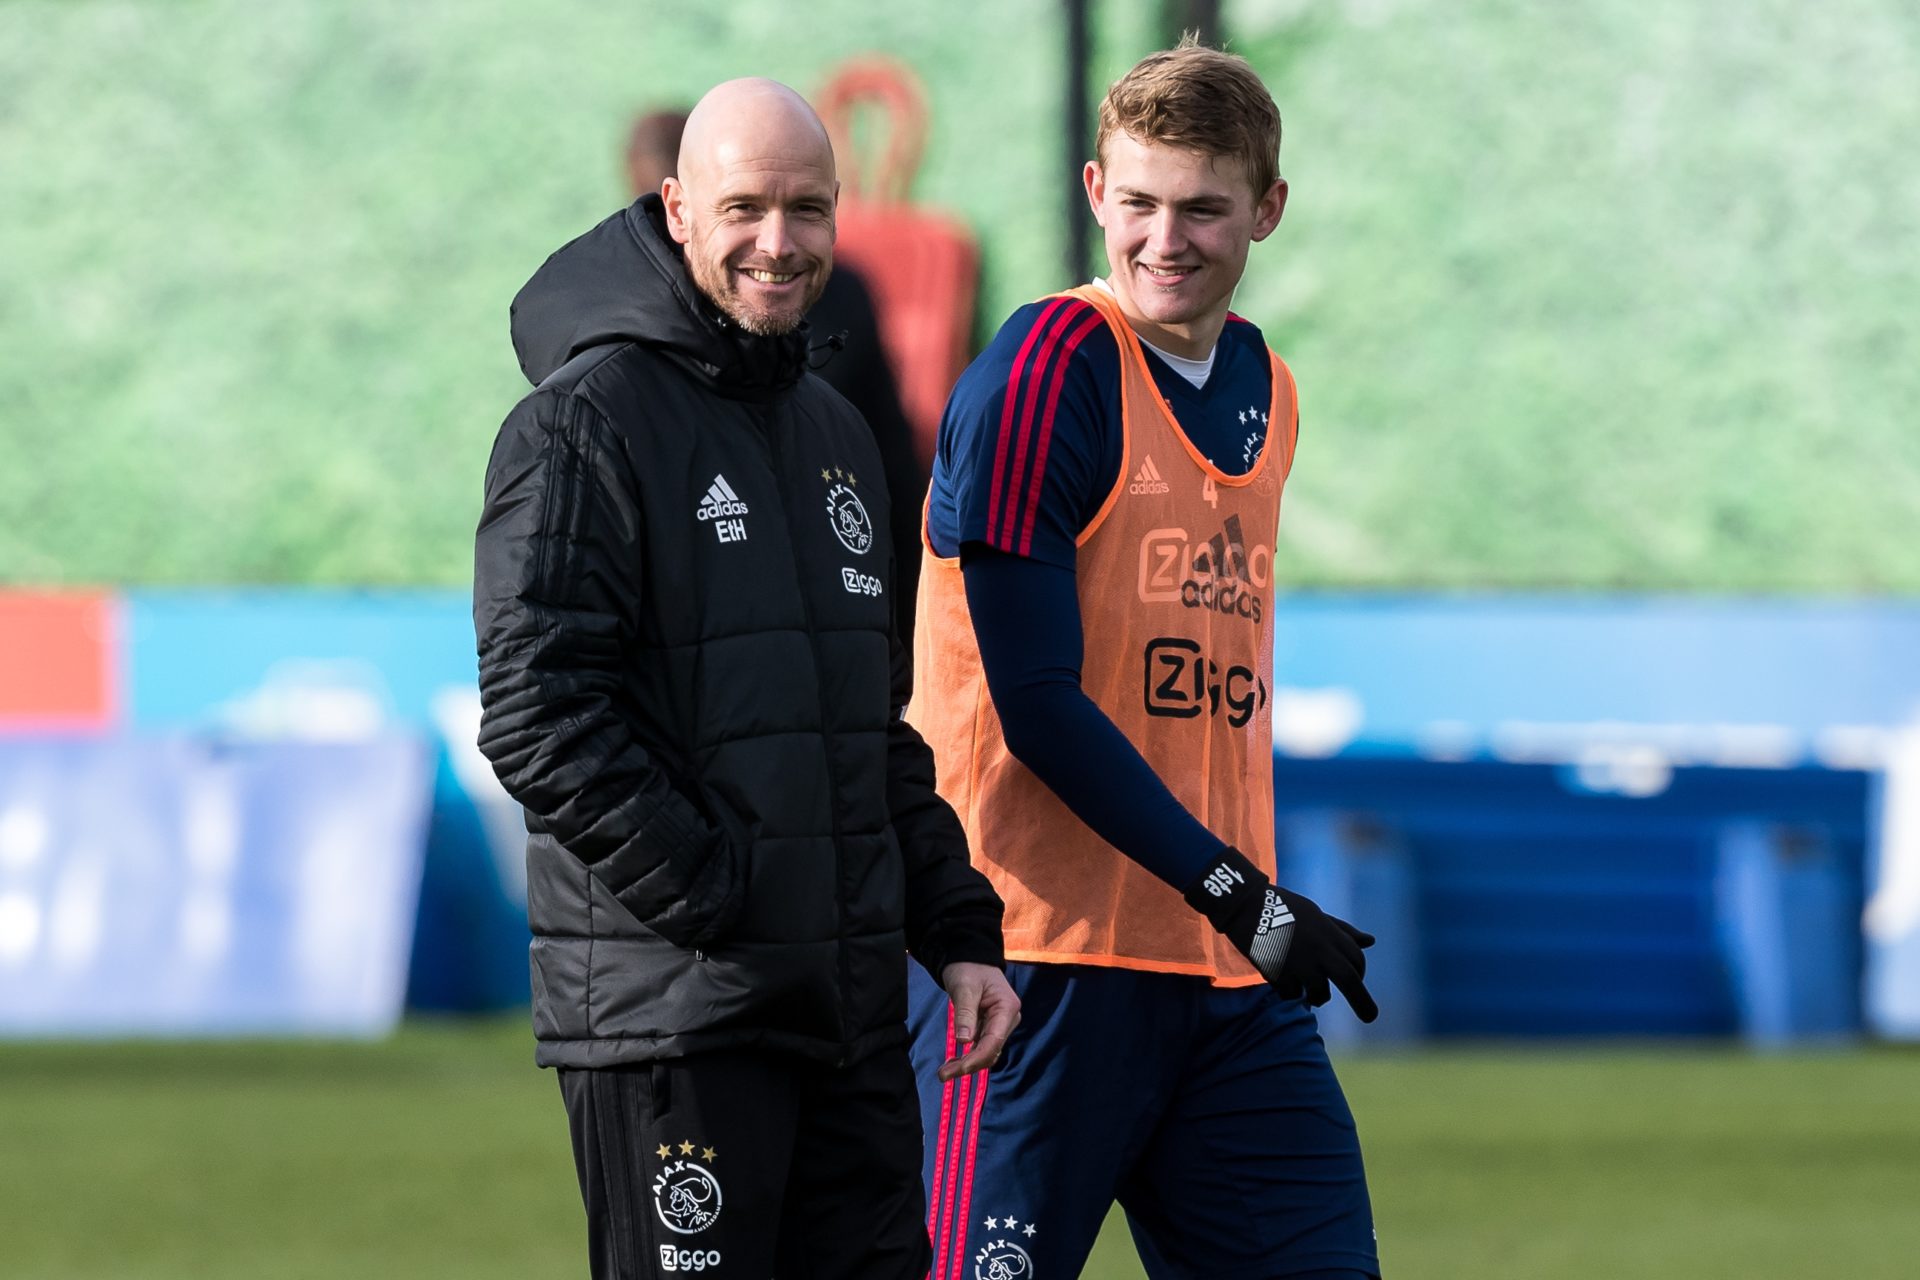 "Training Ajax"